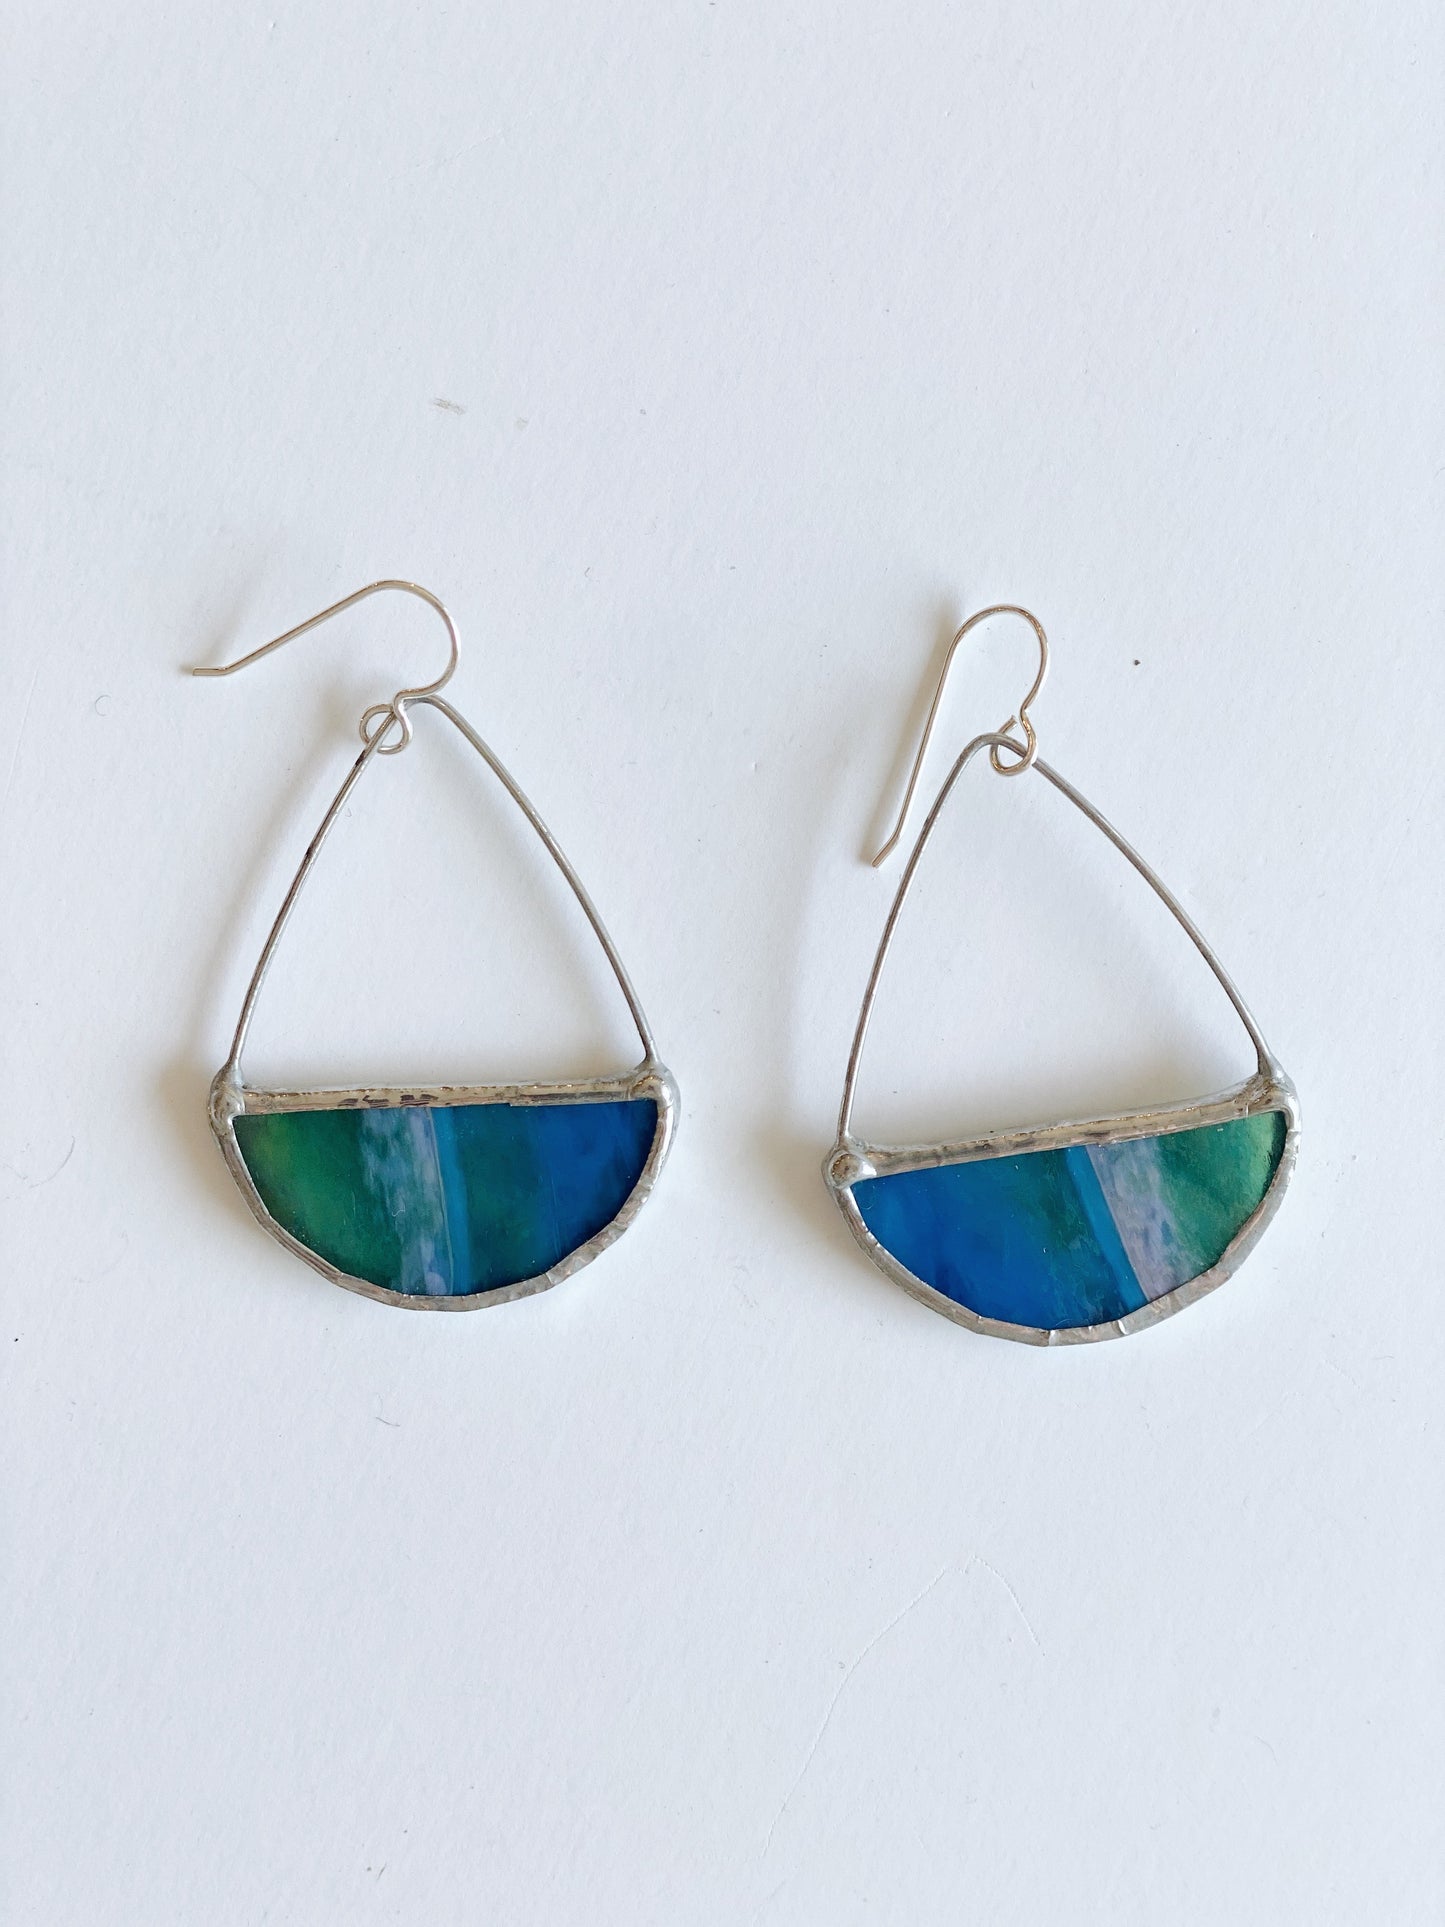 Stained Glass Earrings - Blue Half Hoops